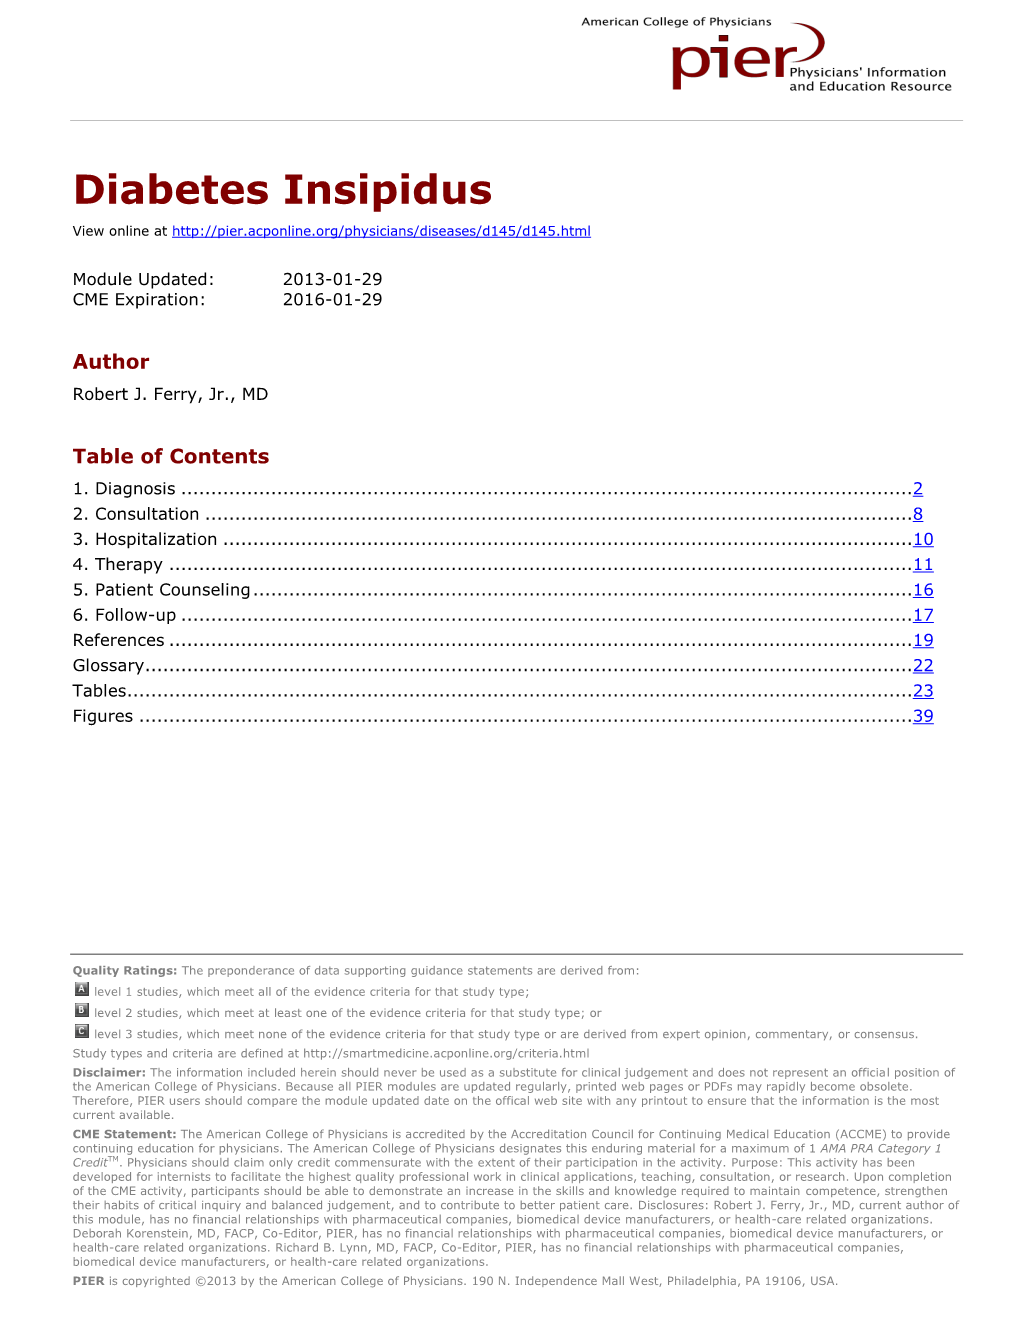 Diabetes Insipidus View Online At